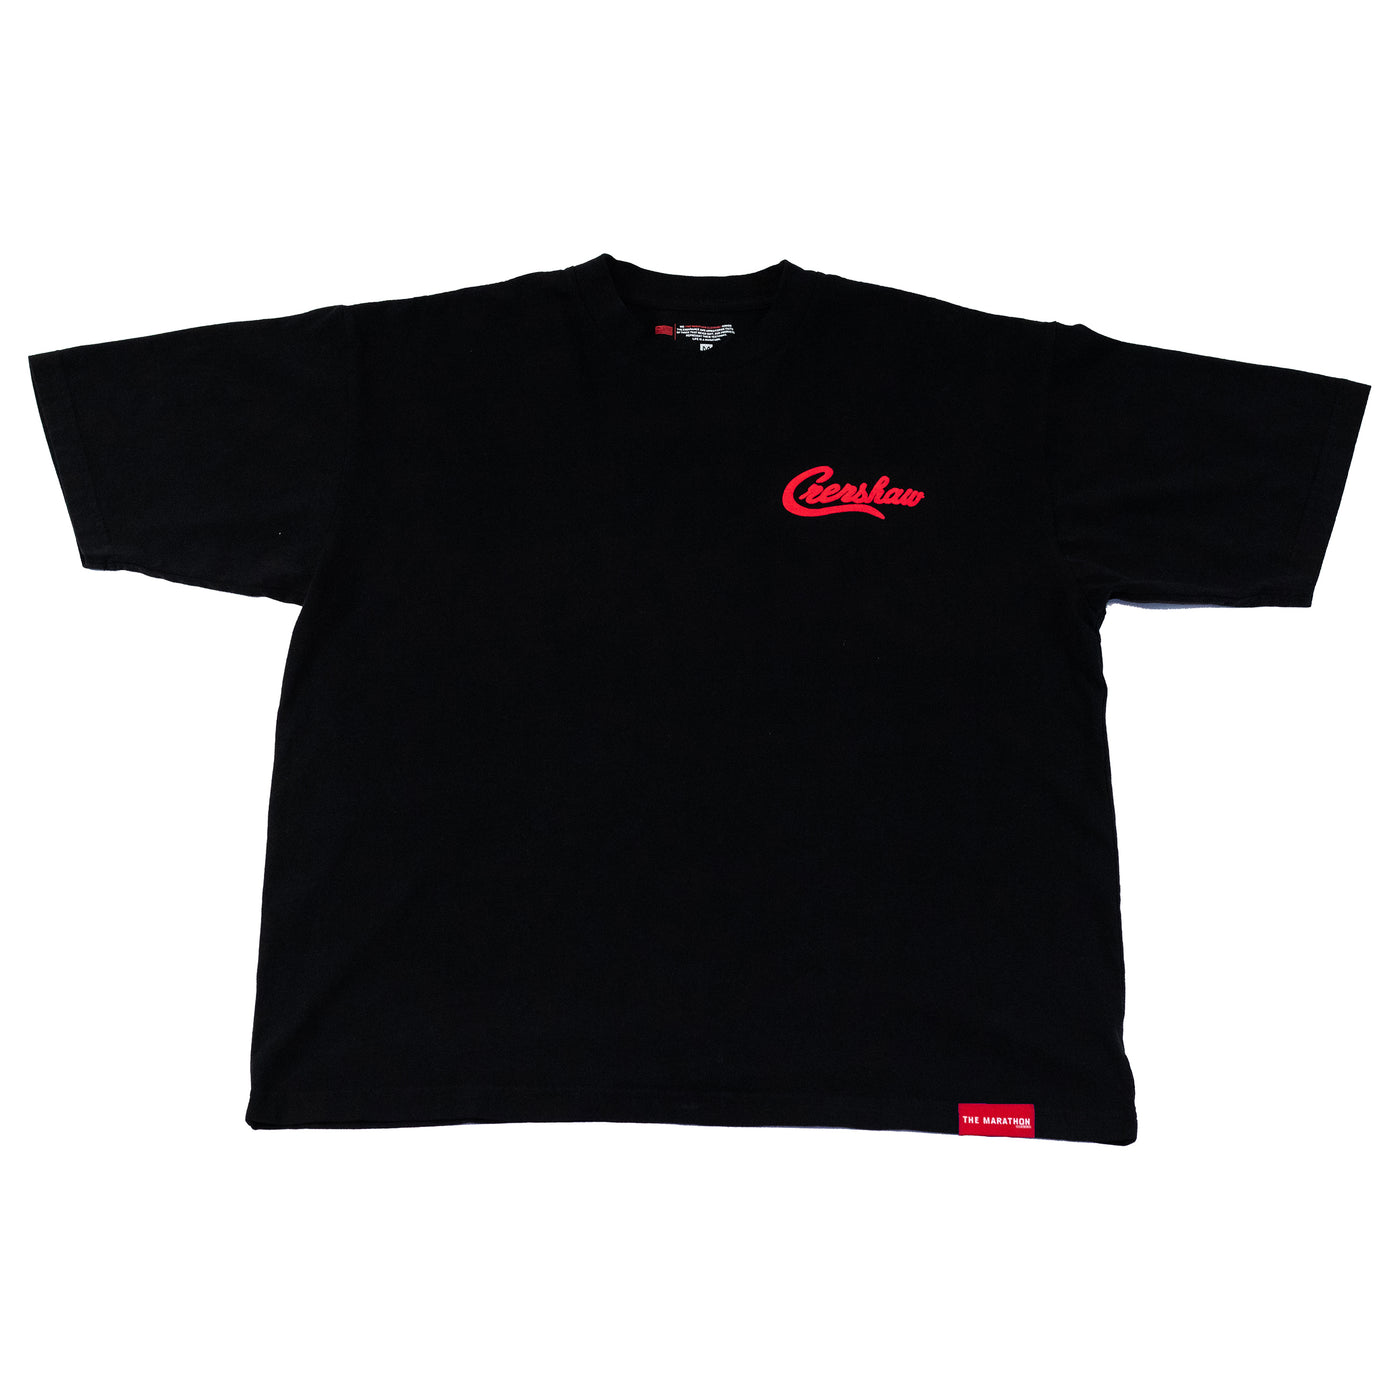 Crenshaw Classic LA T-Shirt - Black/Red